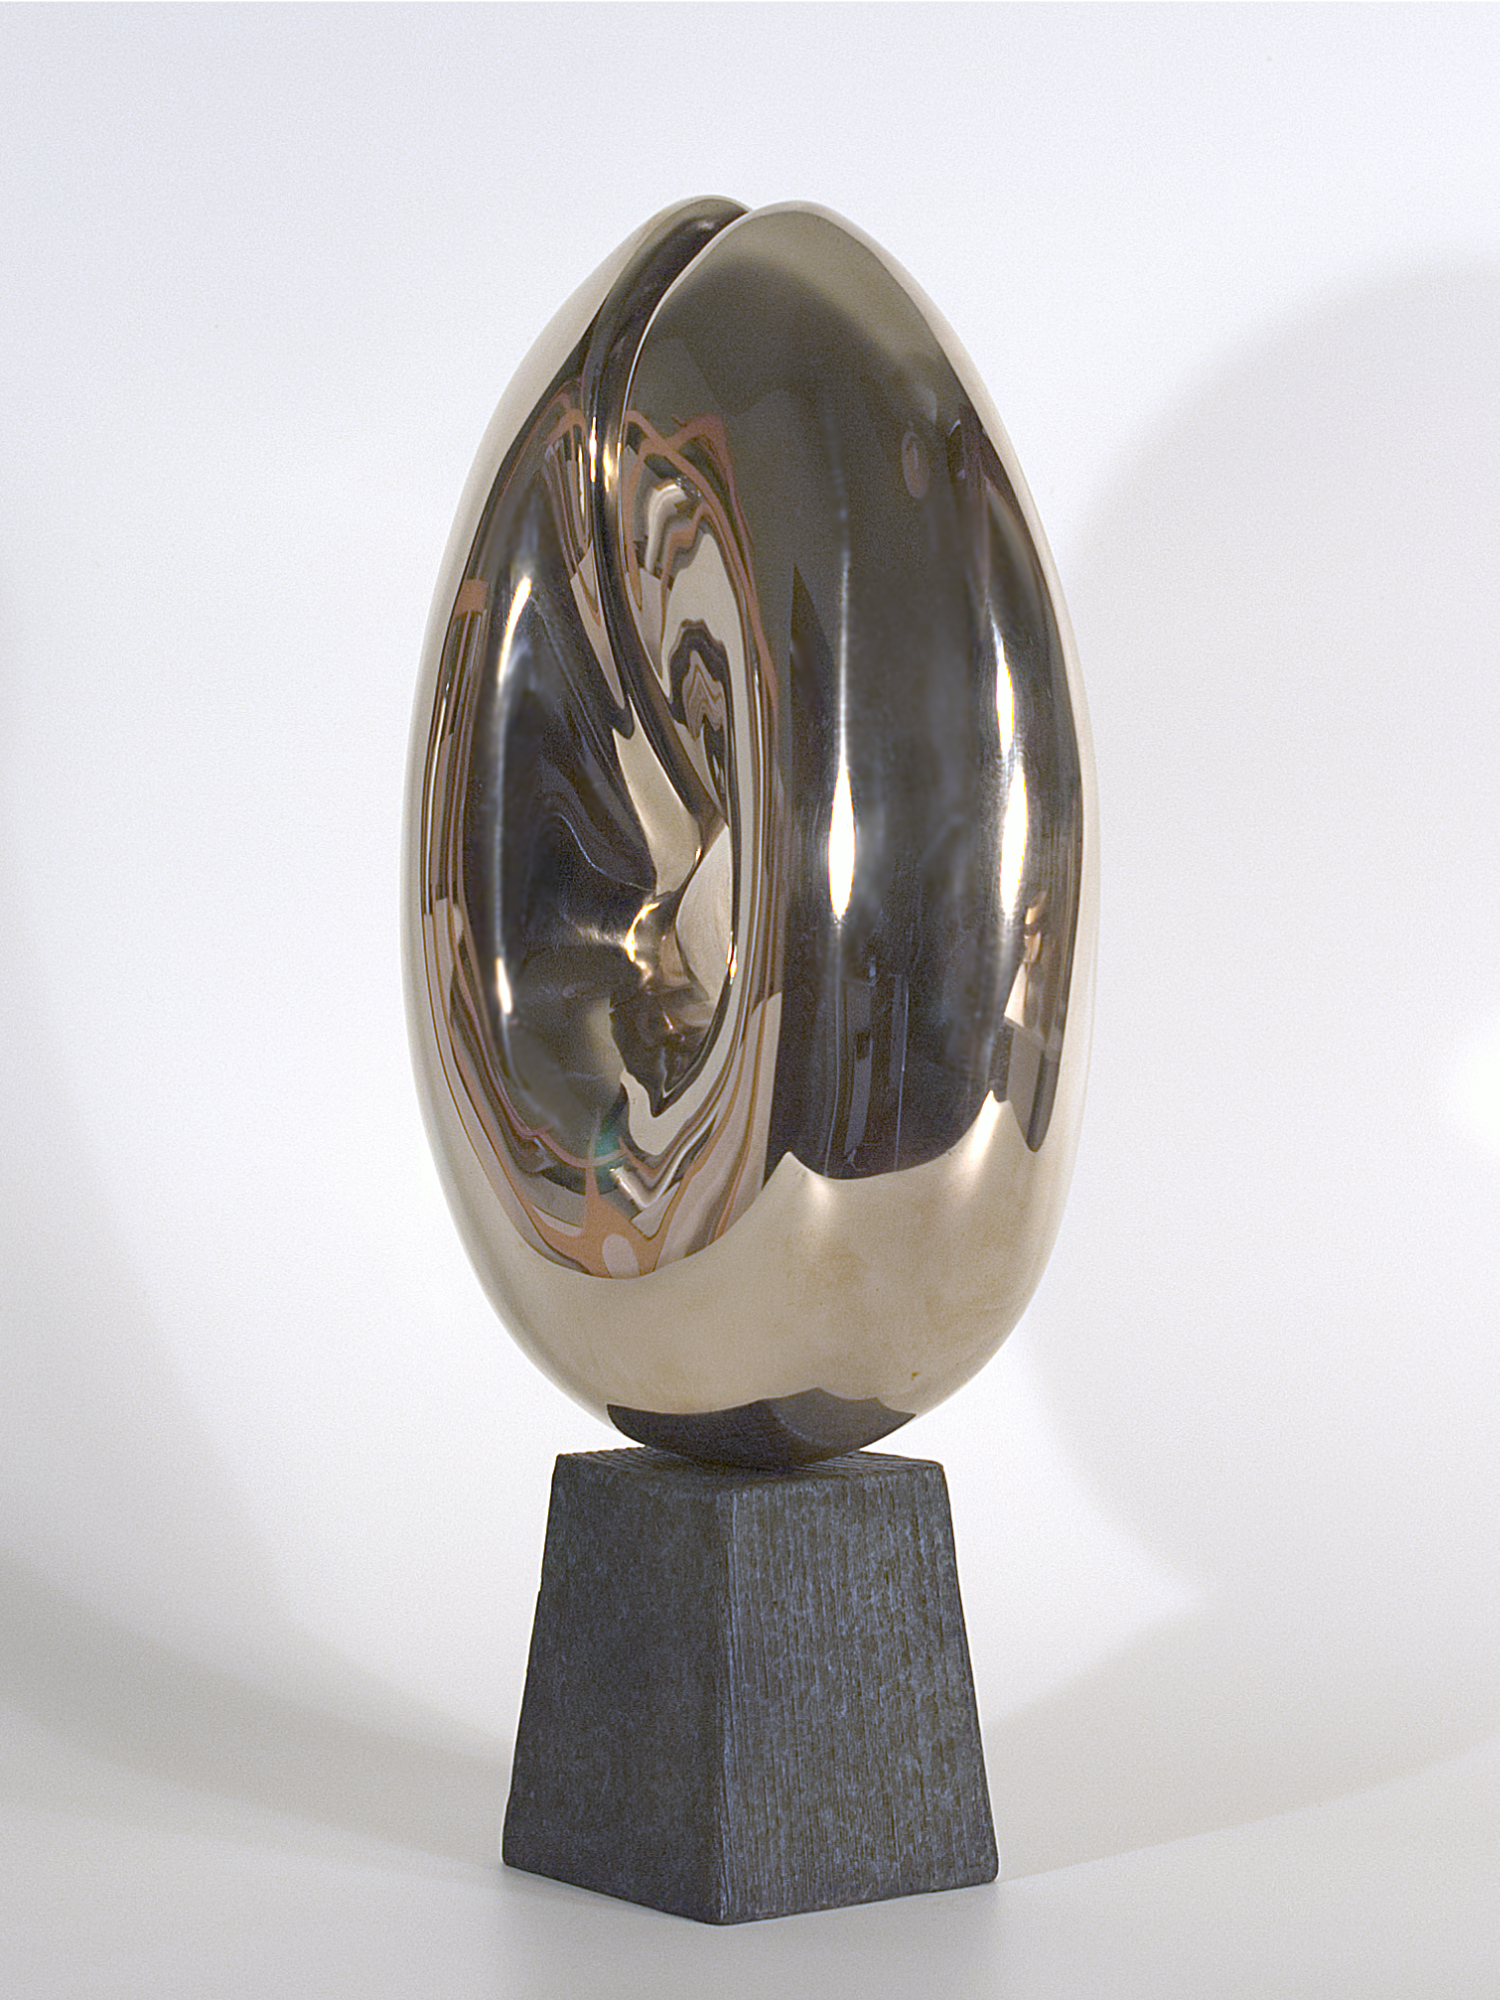 She #1. Modern bronze sculpture by Steve Howlett. 2013